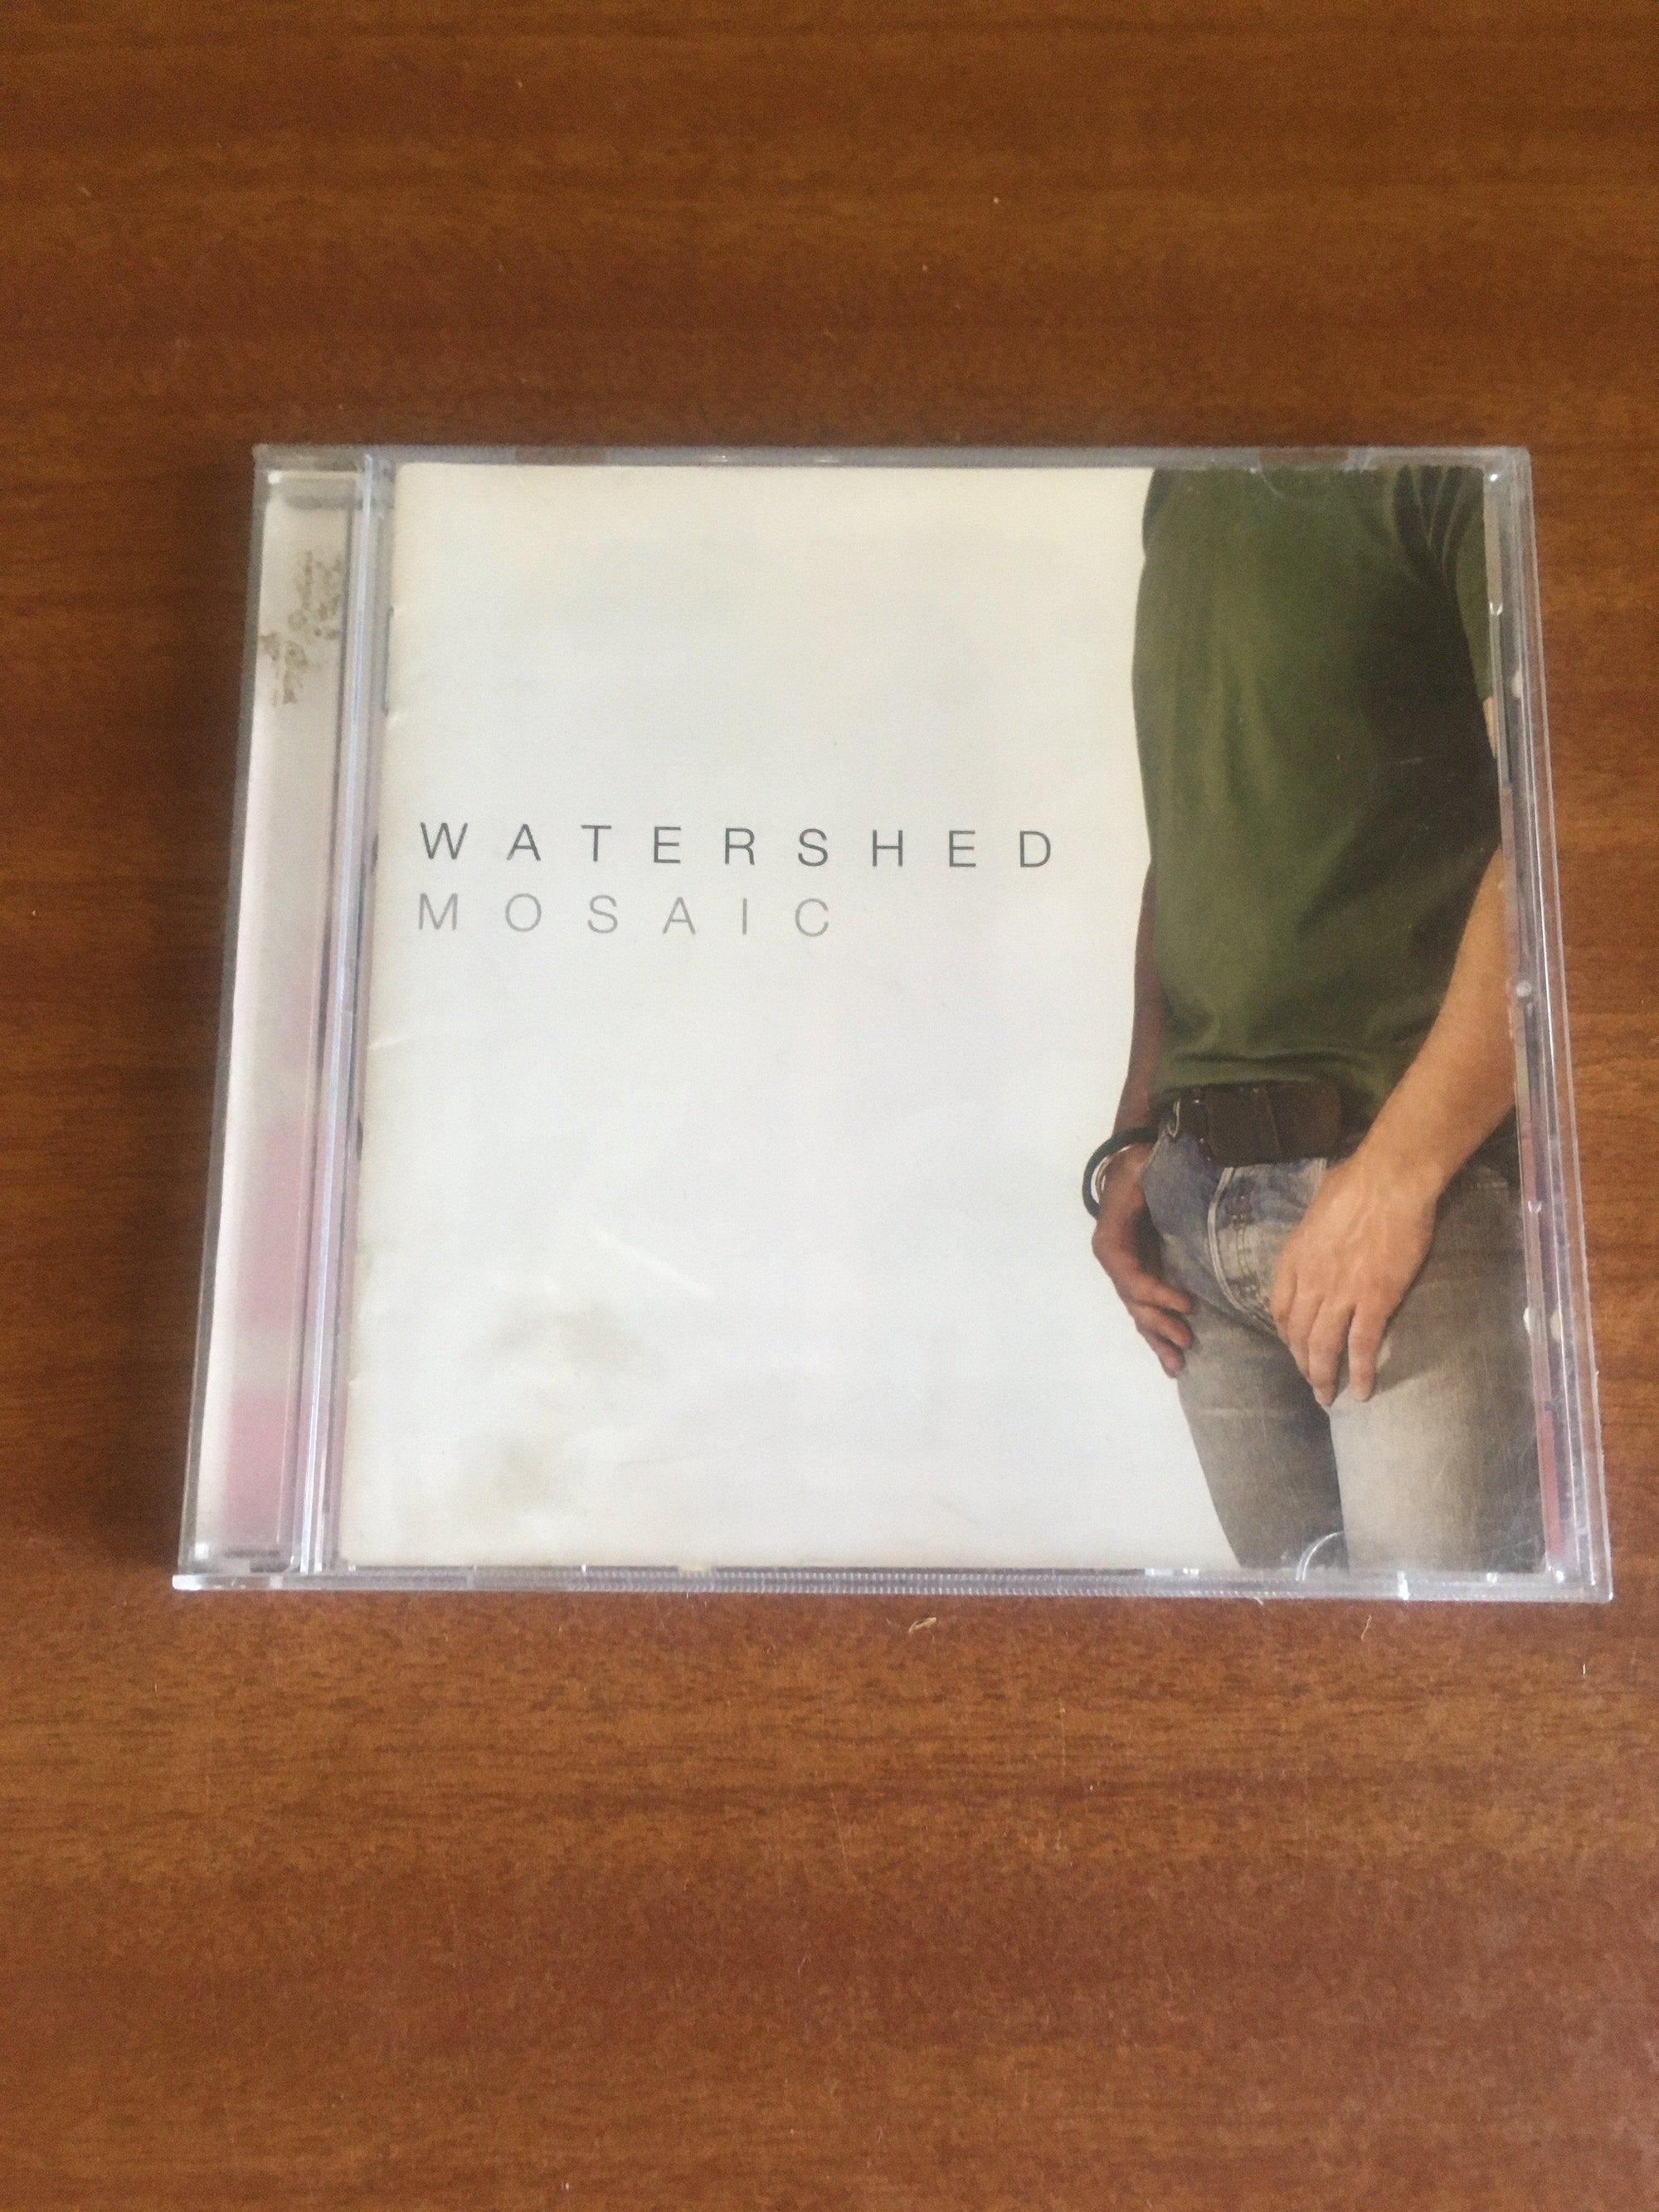 Watershed (Cd) - 2ndhandwarehouse.com